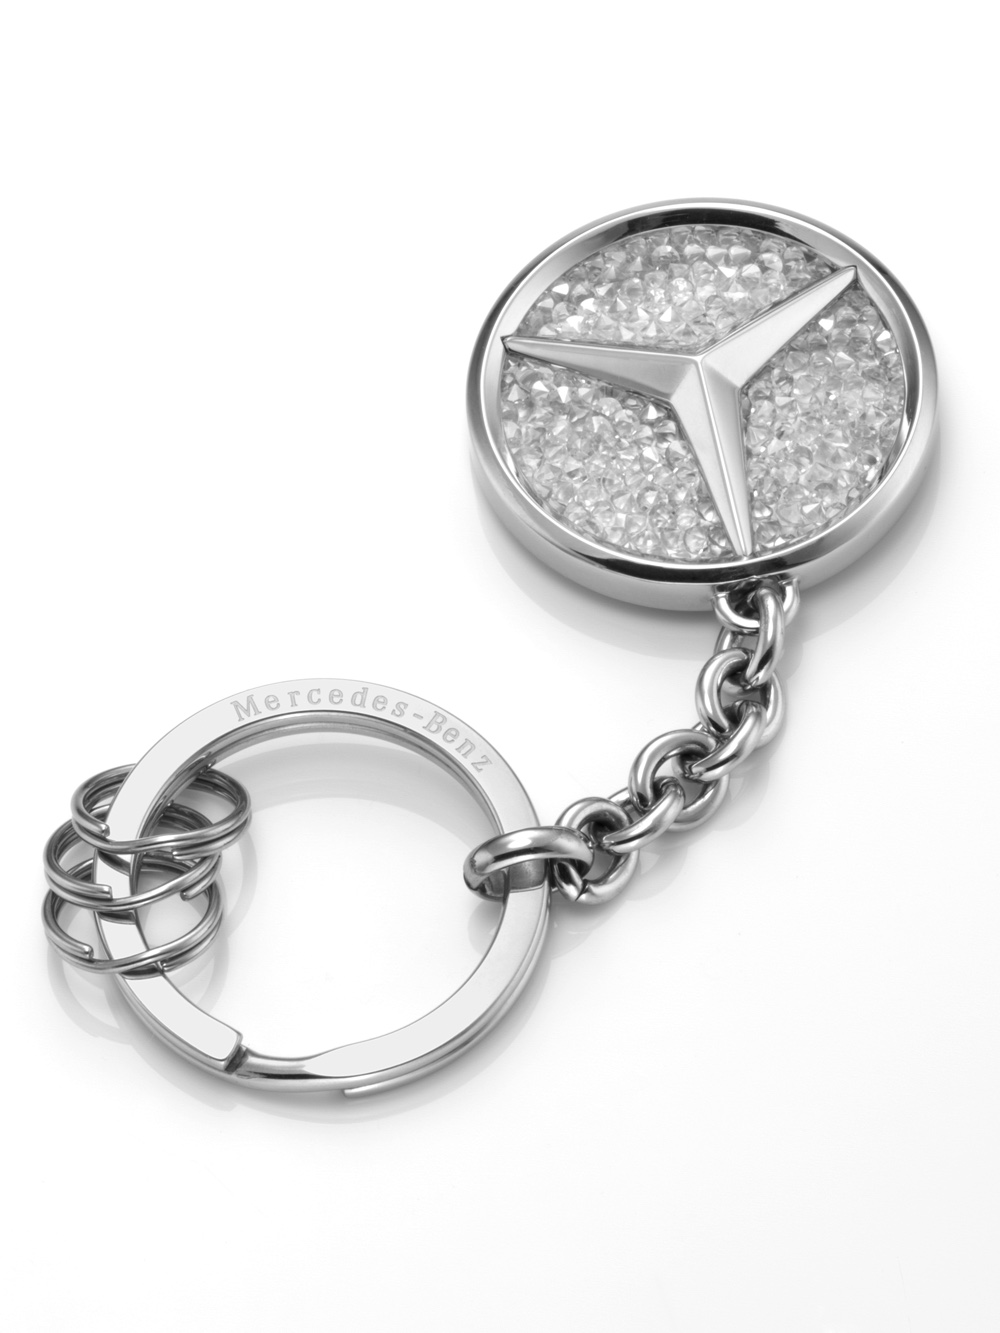 Bikte for Mercedes Benz Key Fob Cover, Premium Soft India | Ubuy